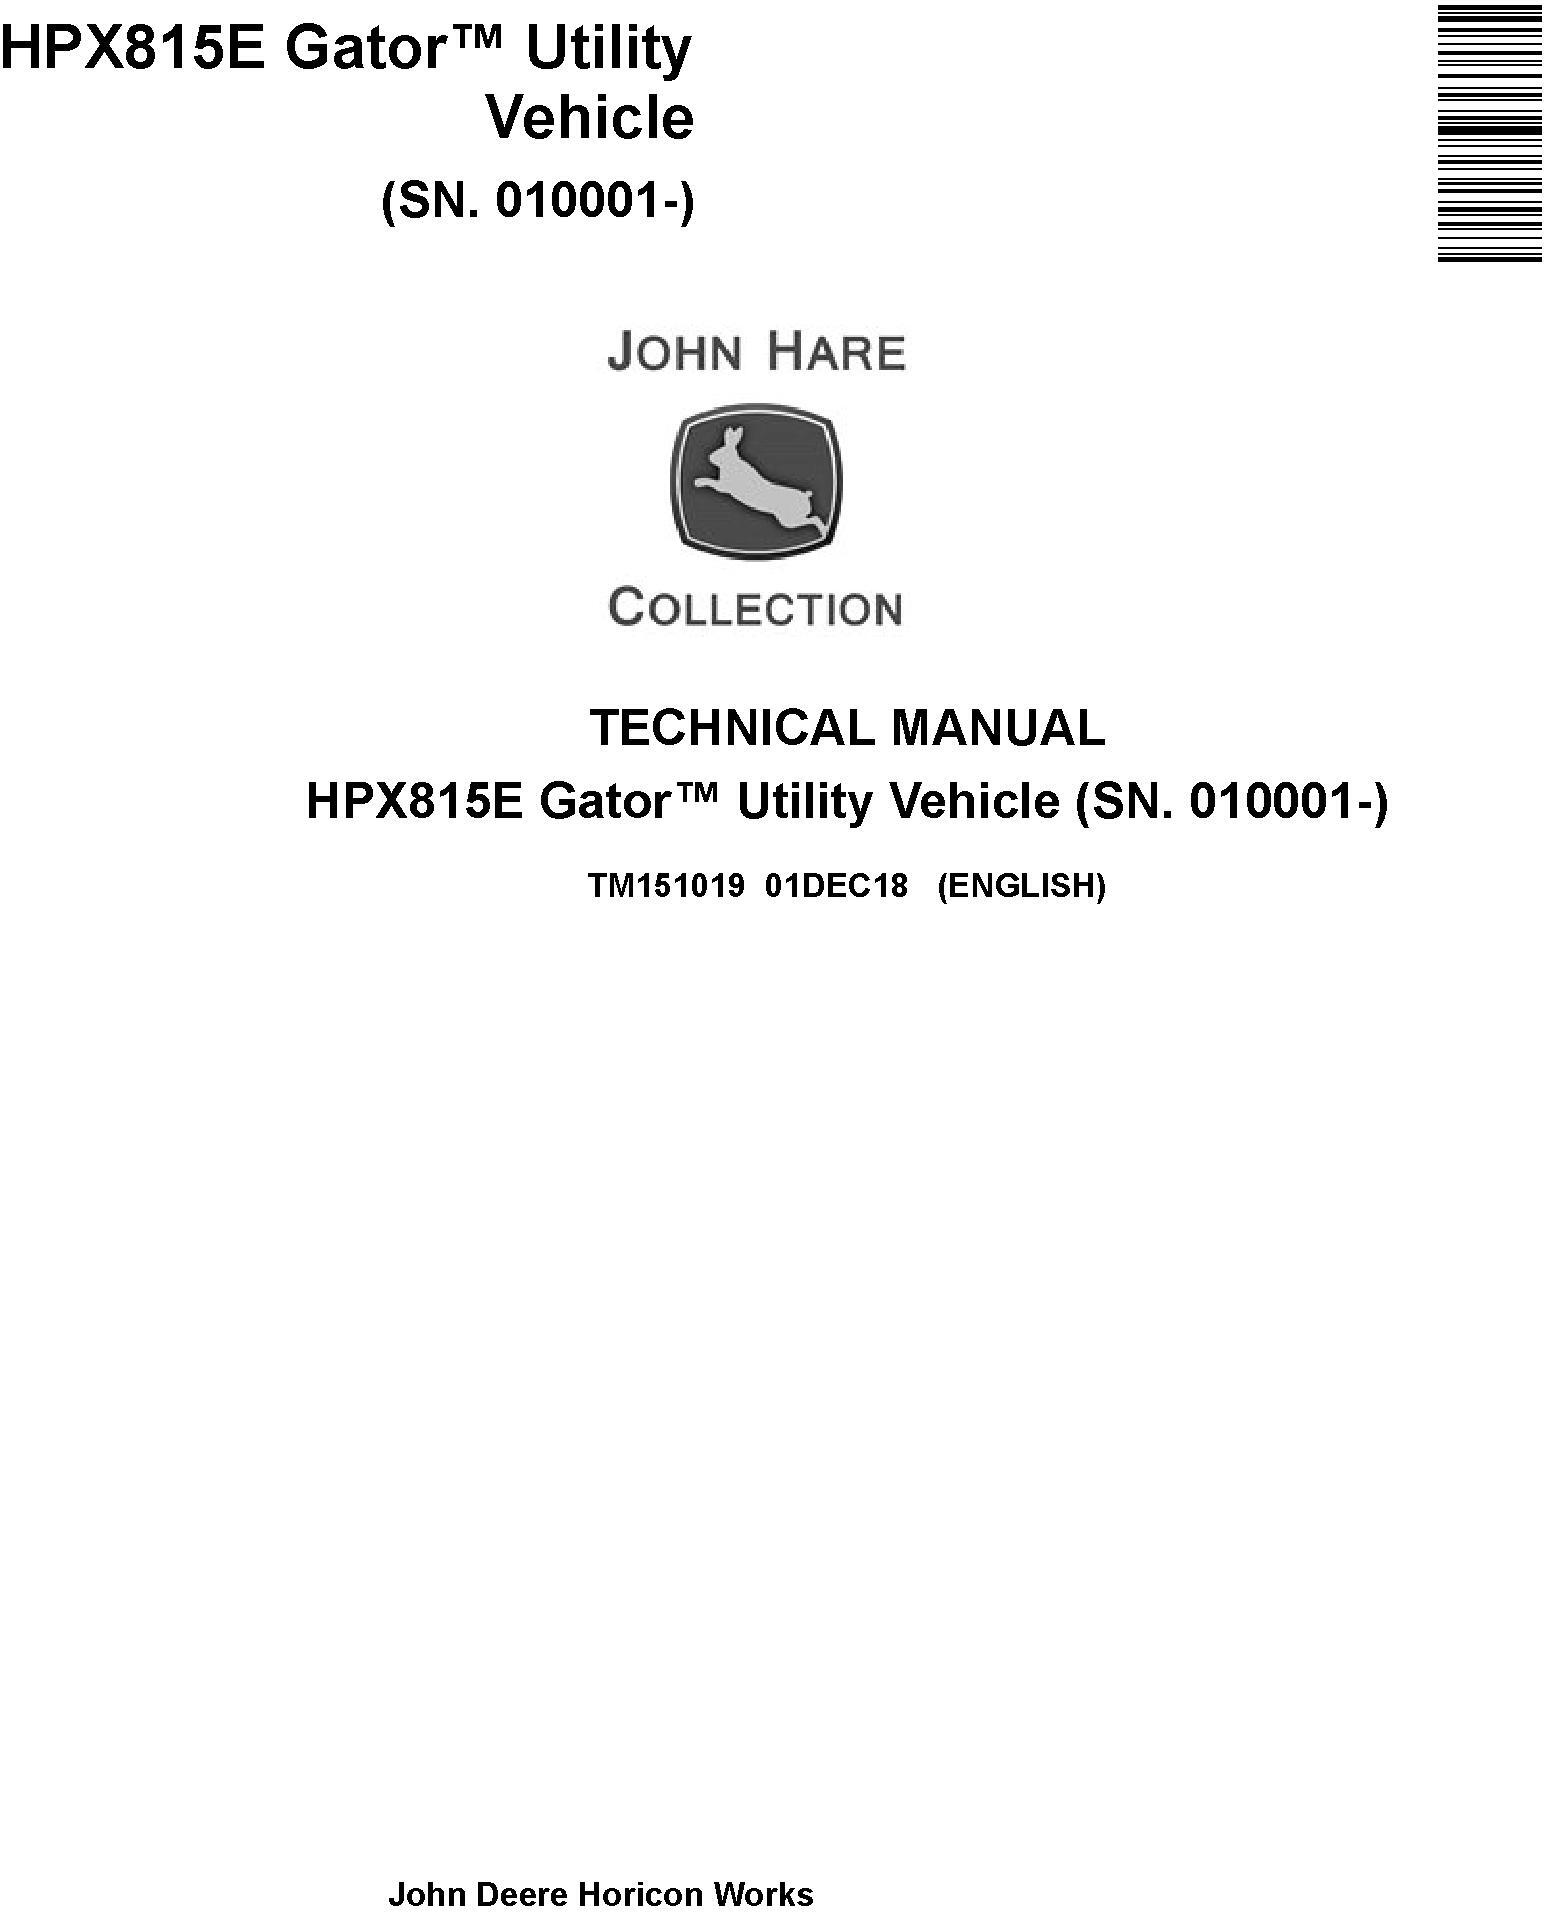 John Deere HPX815E Gator Utility Vehicle Technical Manual TM151019